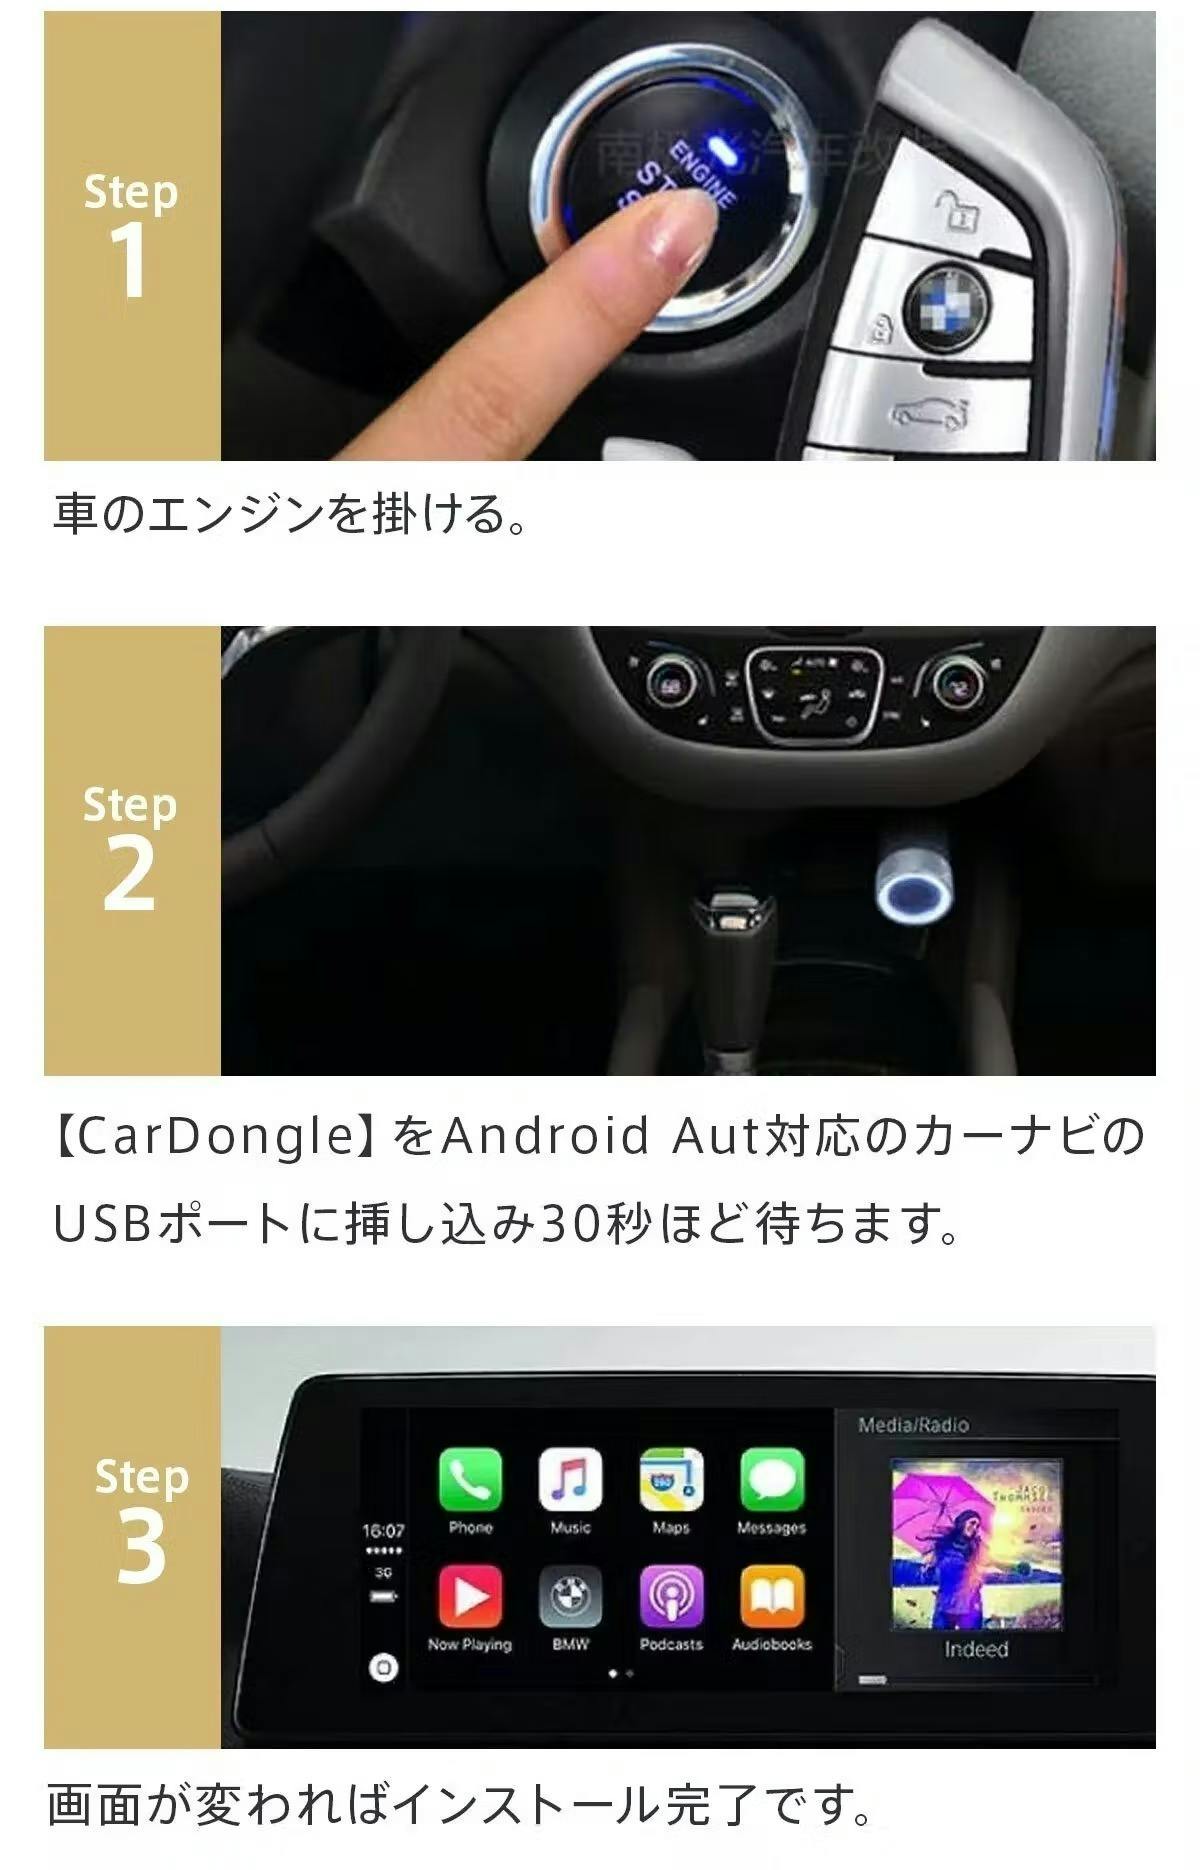 CaCarDongle Android搭載 車載ナビ 車載動画 - カーナビ